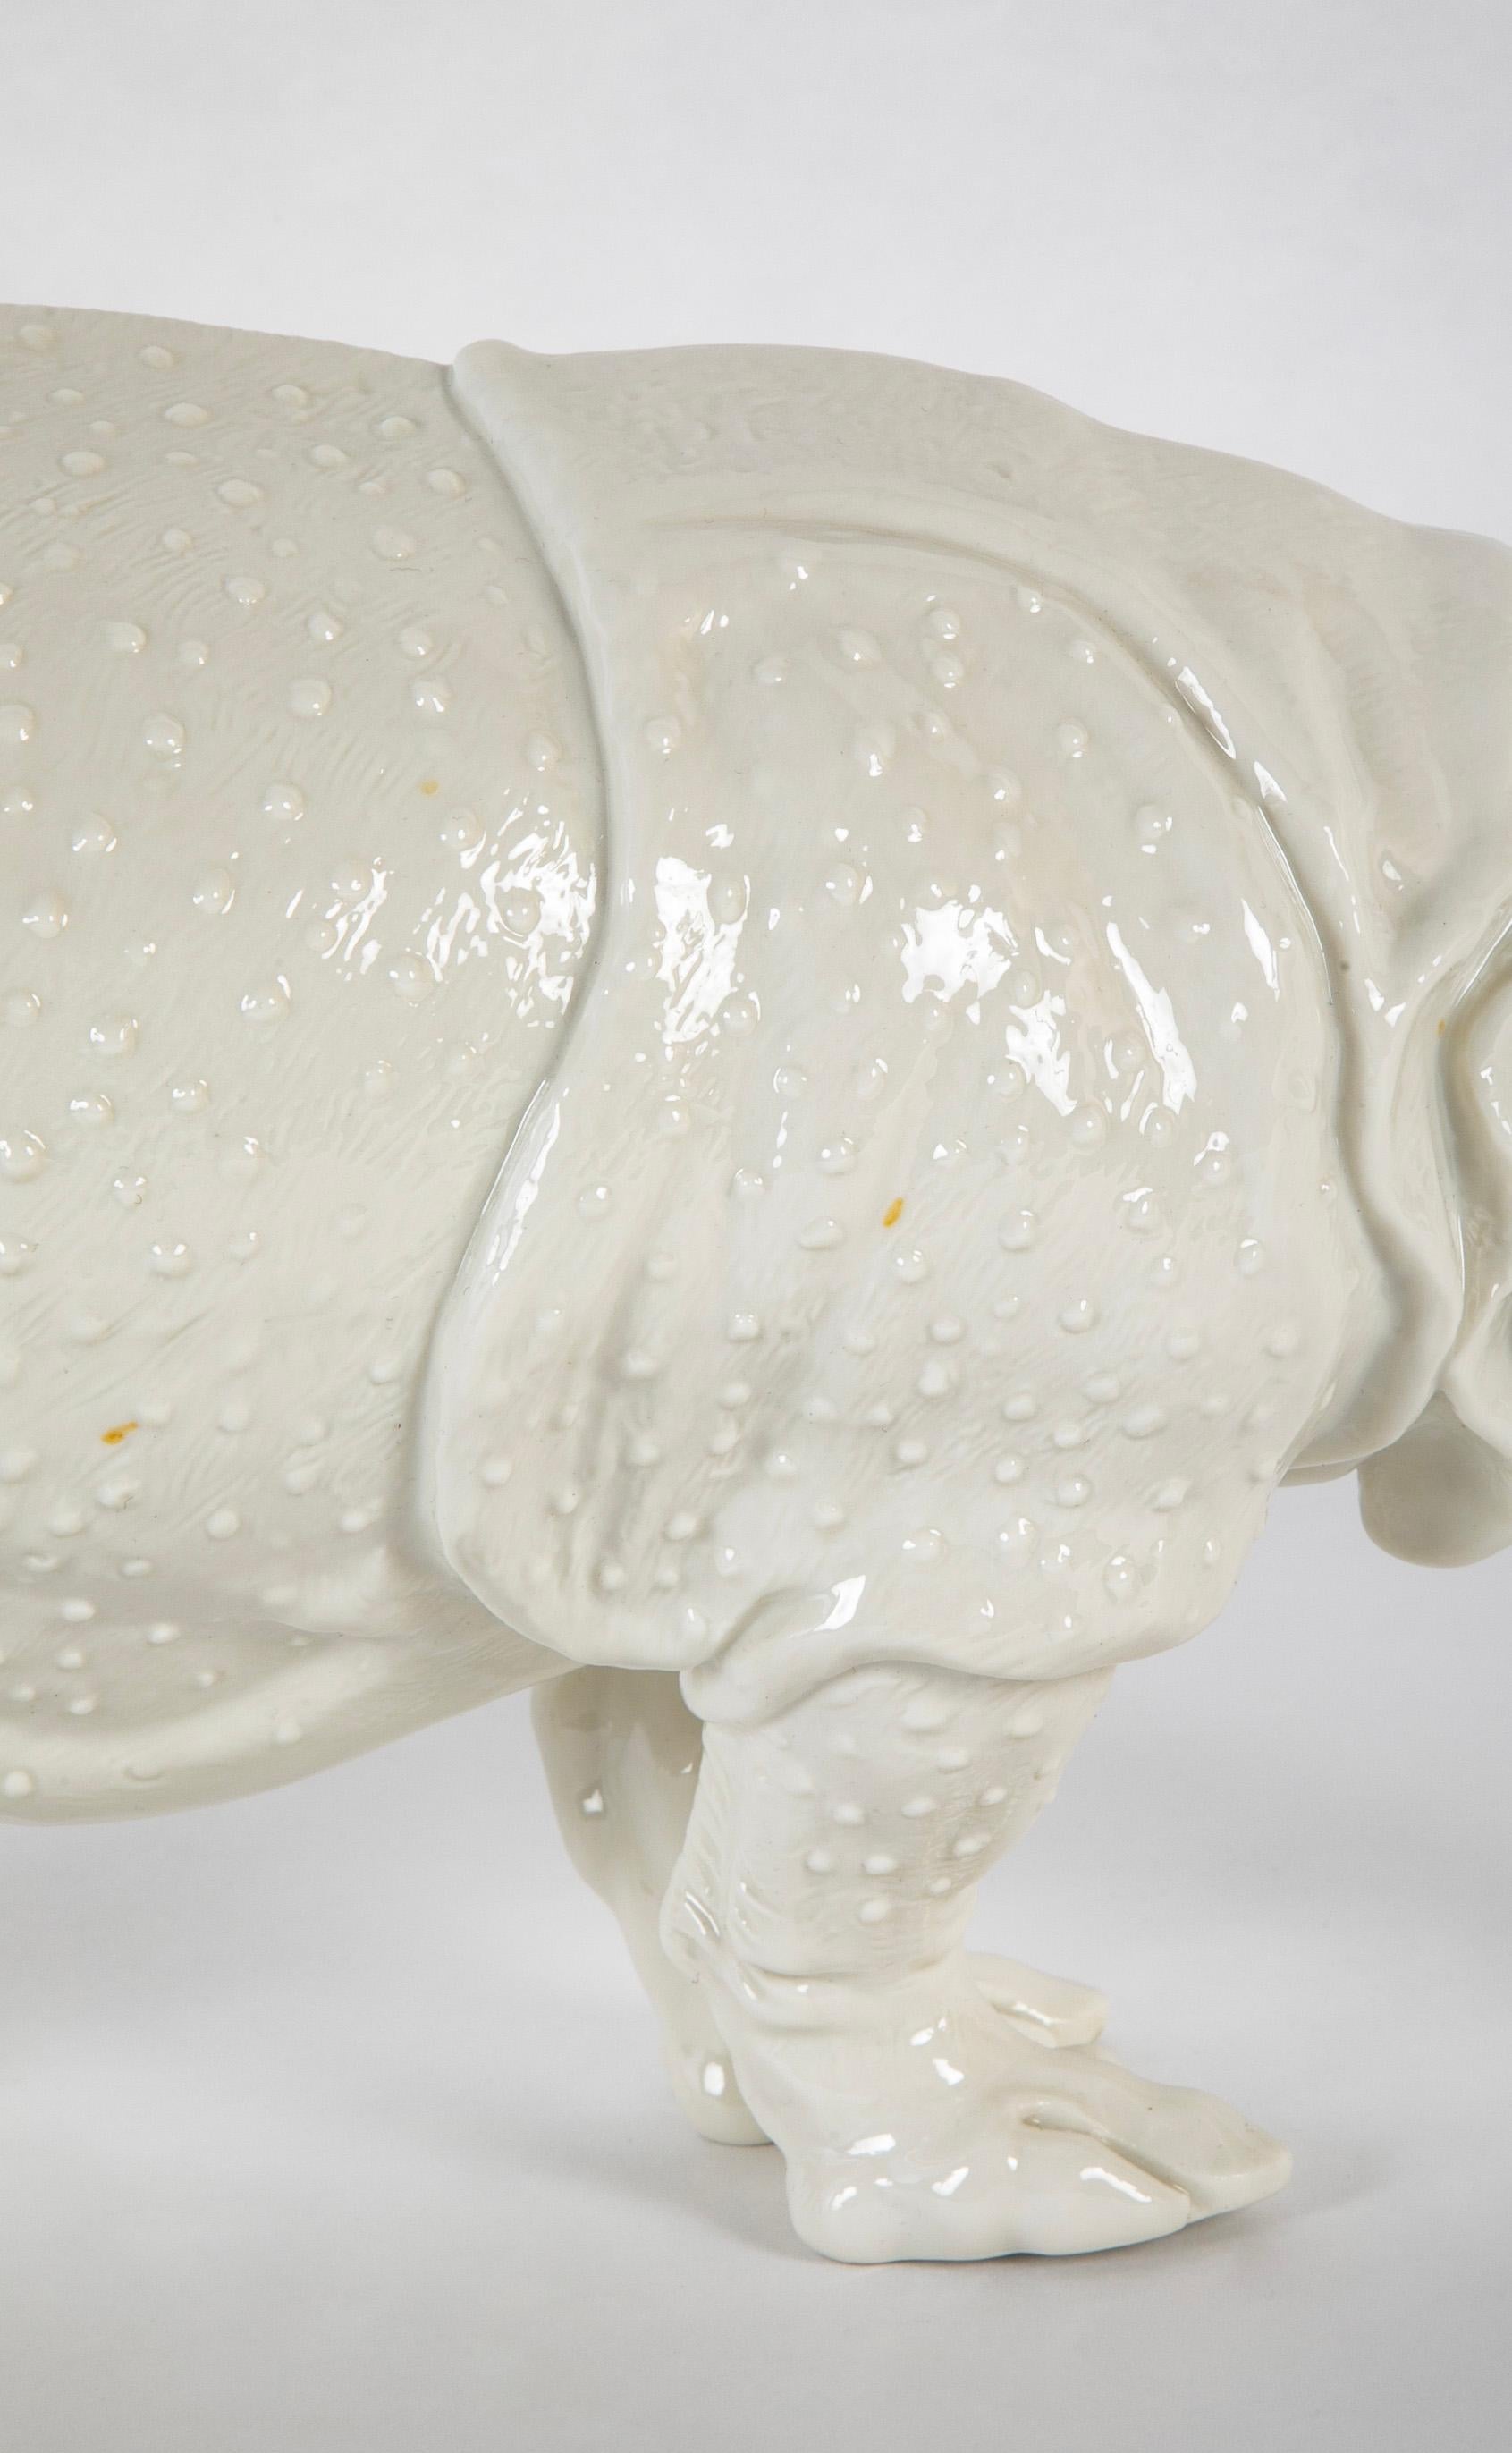 Rhino Clara Nymphenburg Frankenthaler Model in White Glazed Porcelain For Sale 2